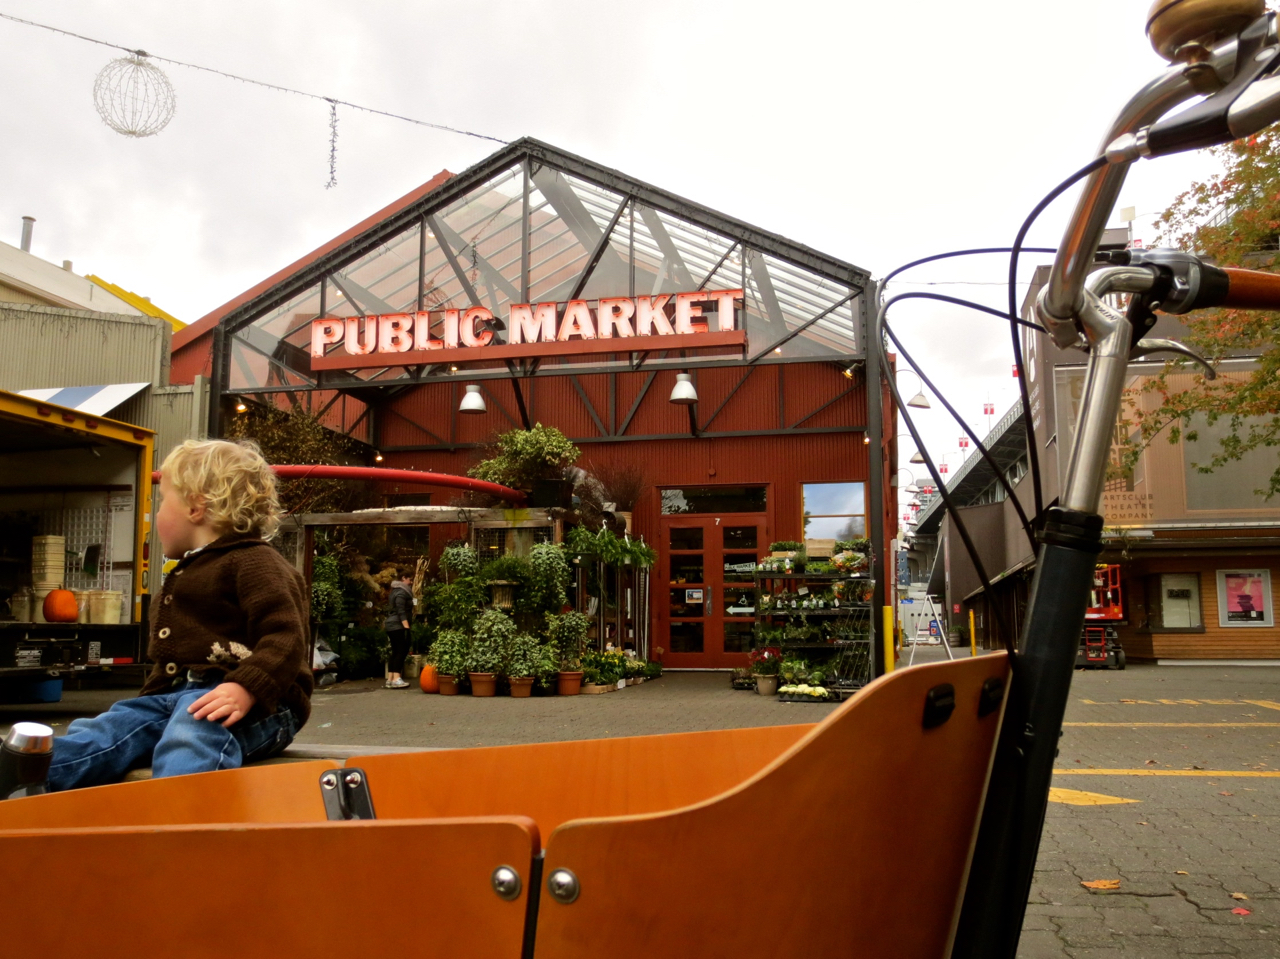 Granville Island's Public Market